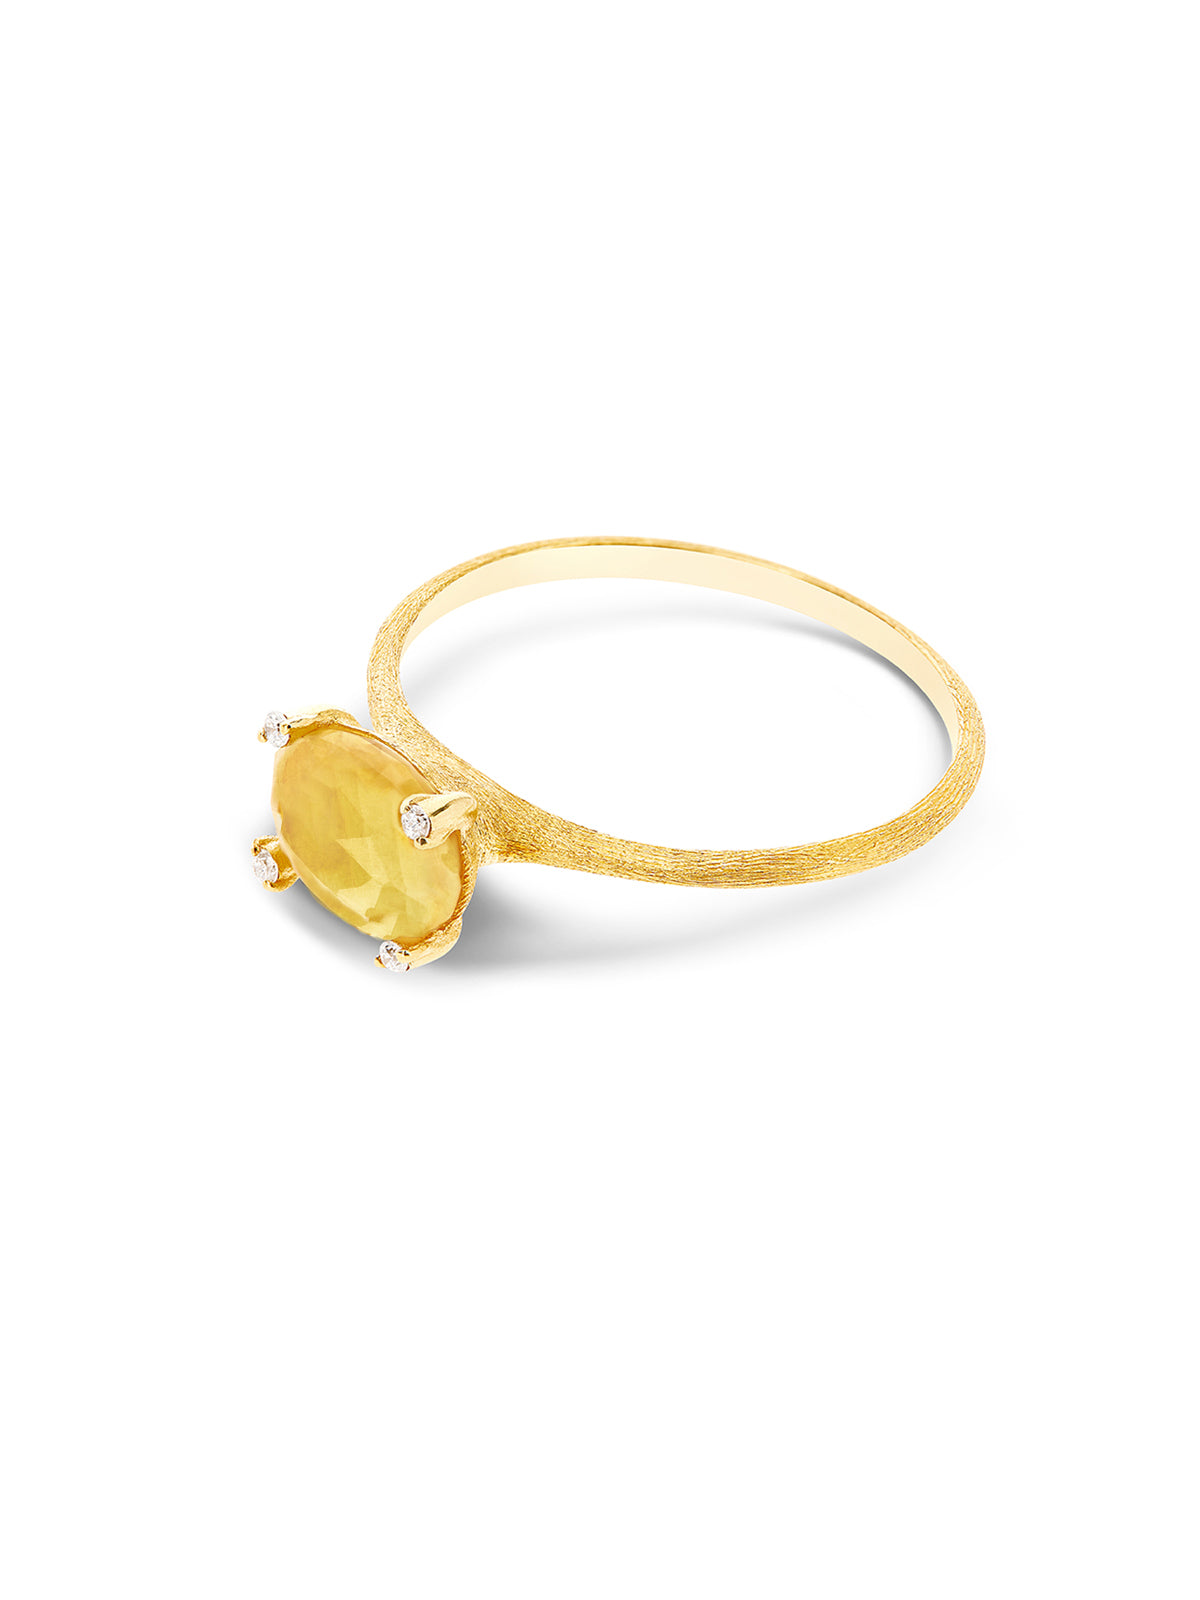 "Ipanema " Gold, Sapphire and Diamonds  Ring